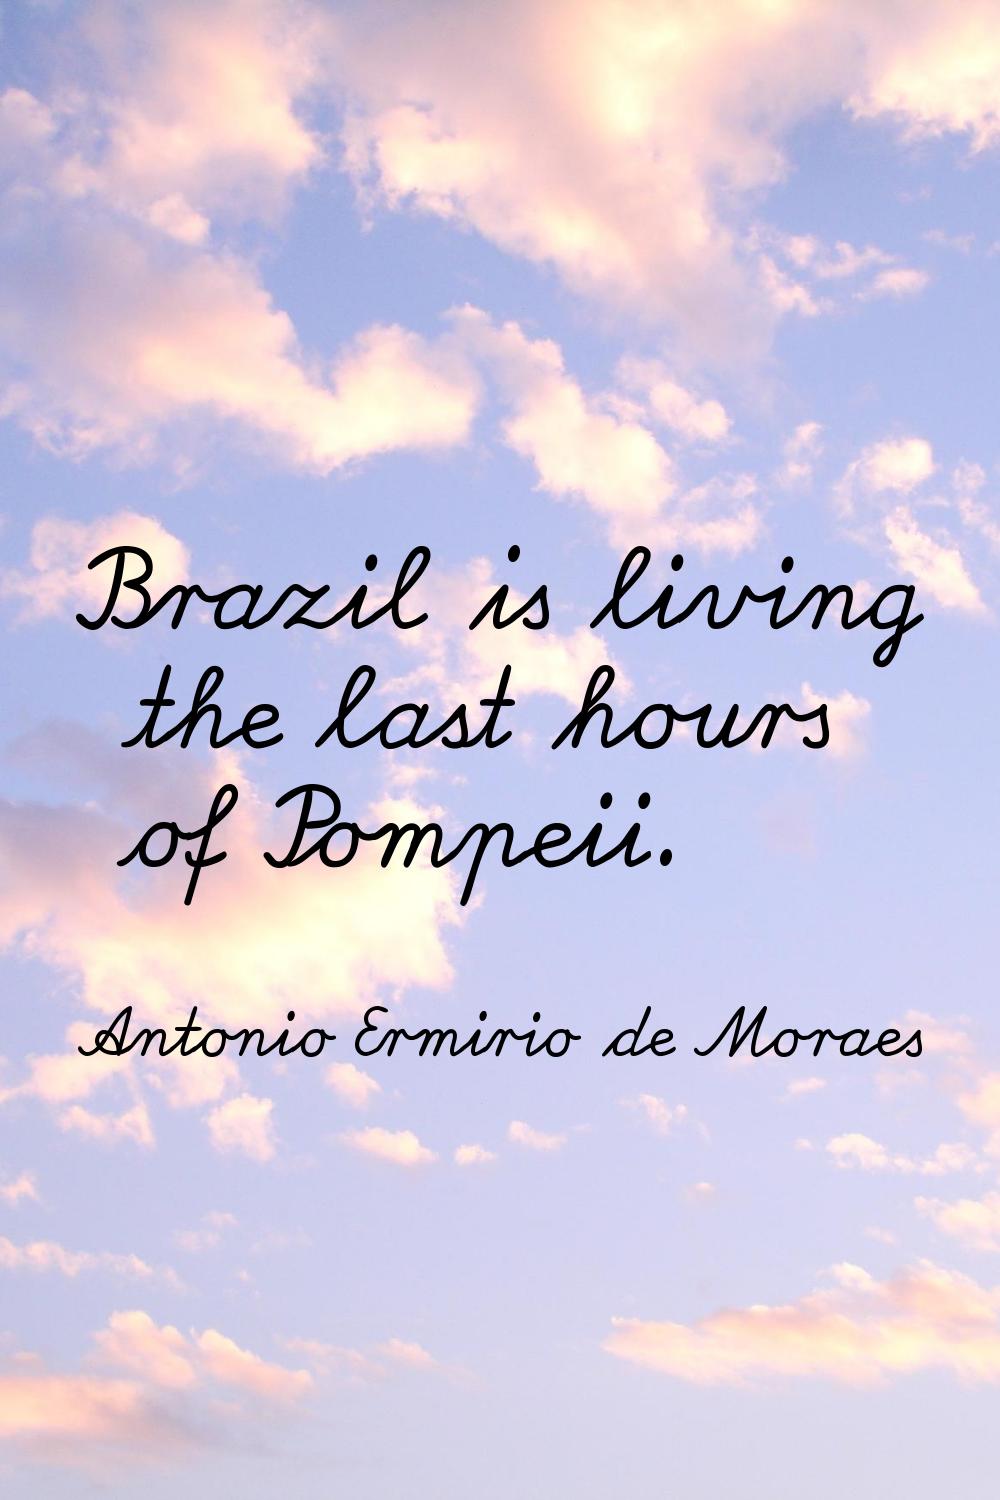 Brazil is living the last hours of Pompeii.